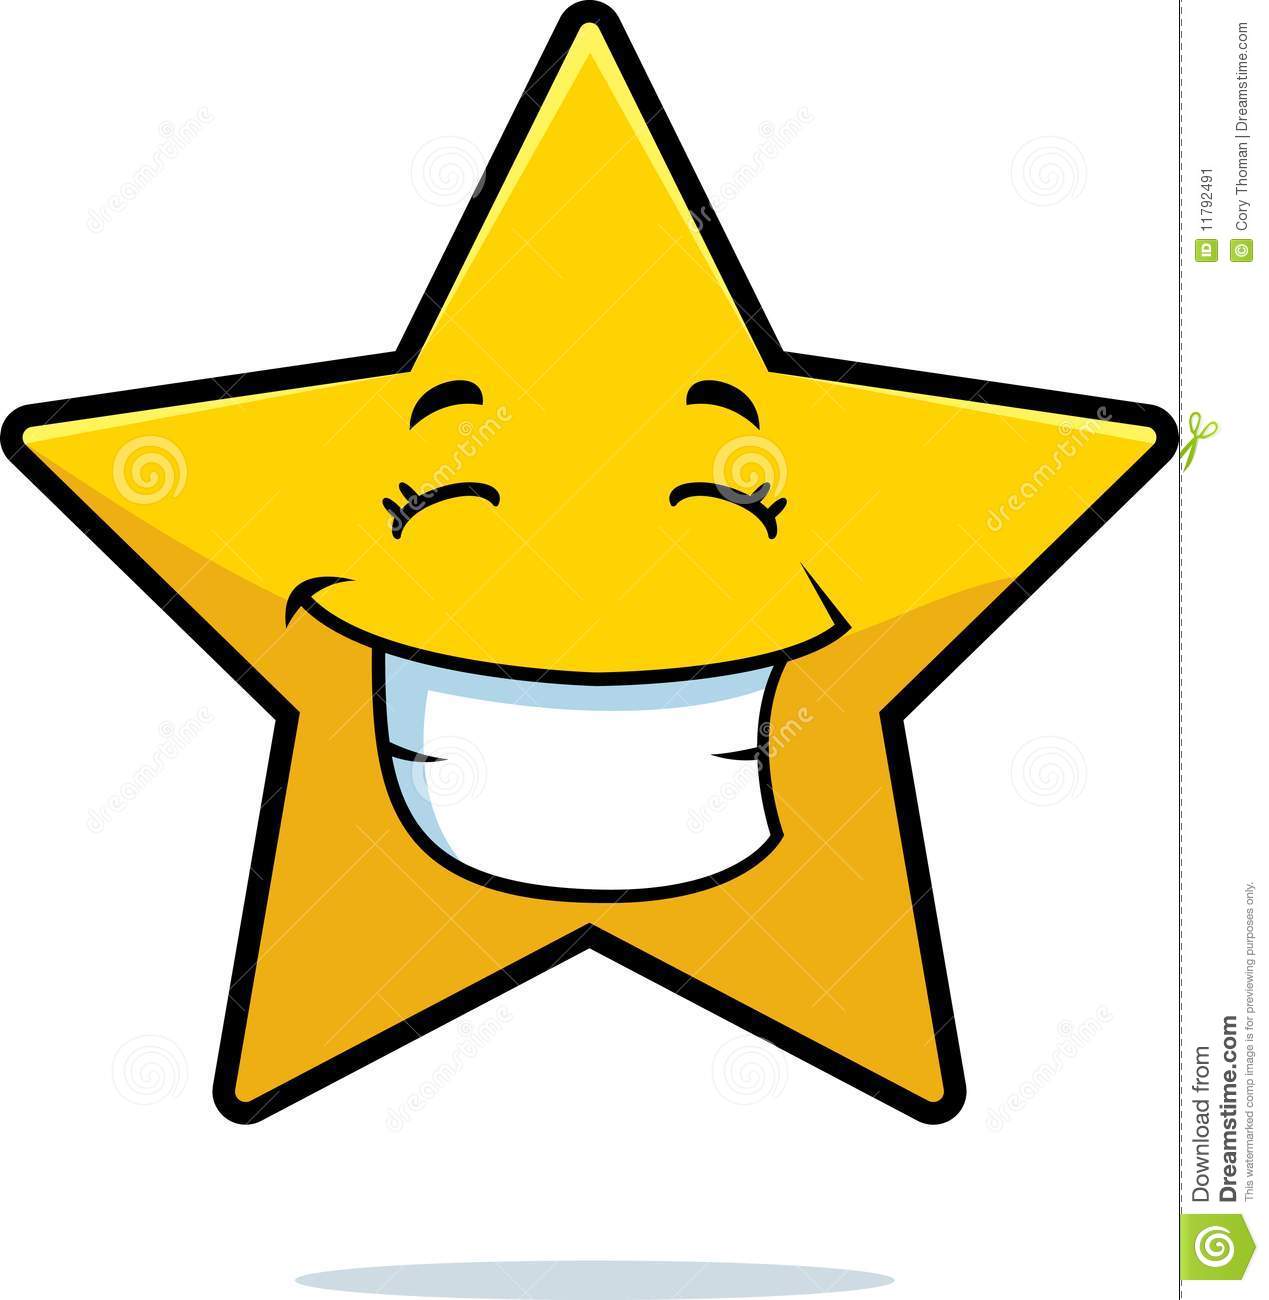 Gold Star Smiling Stock Image   Image  11792491